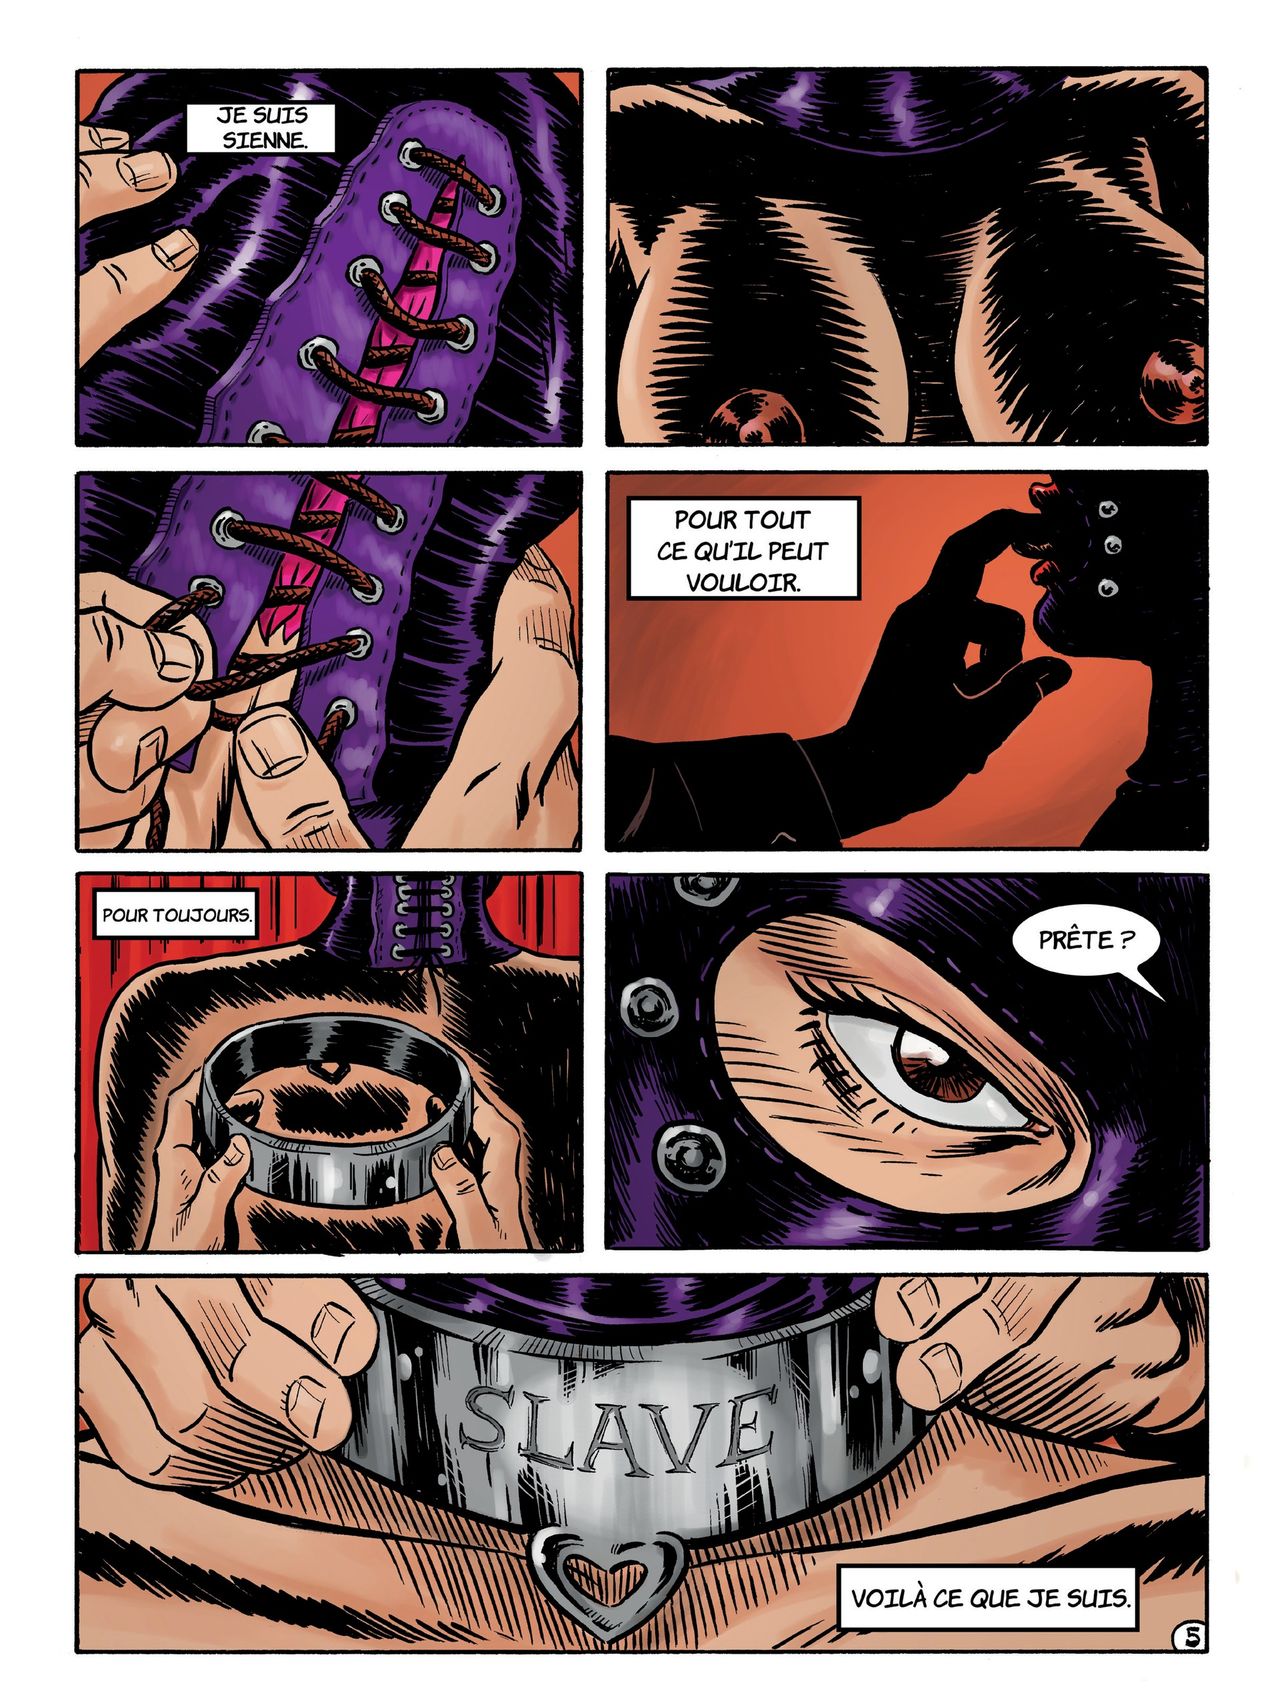 Kinky Slave 2 numero d'image 6